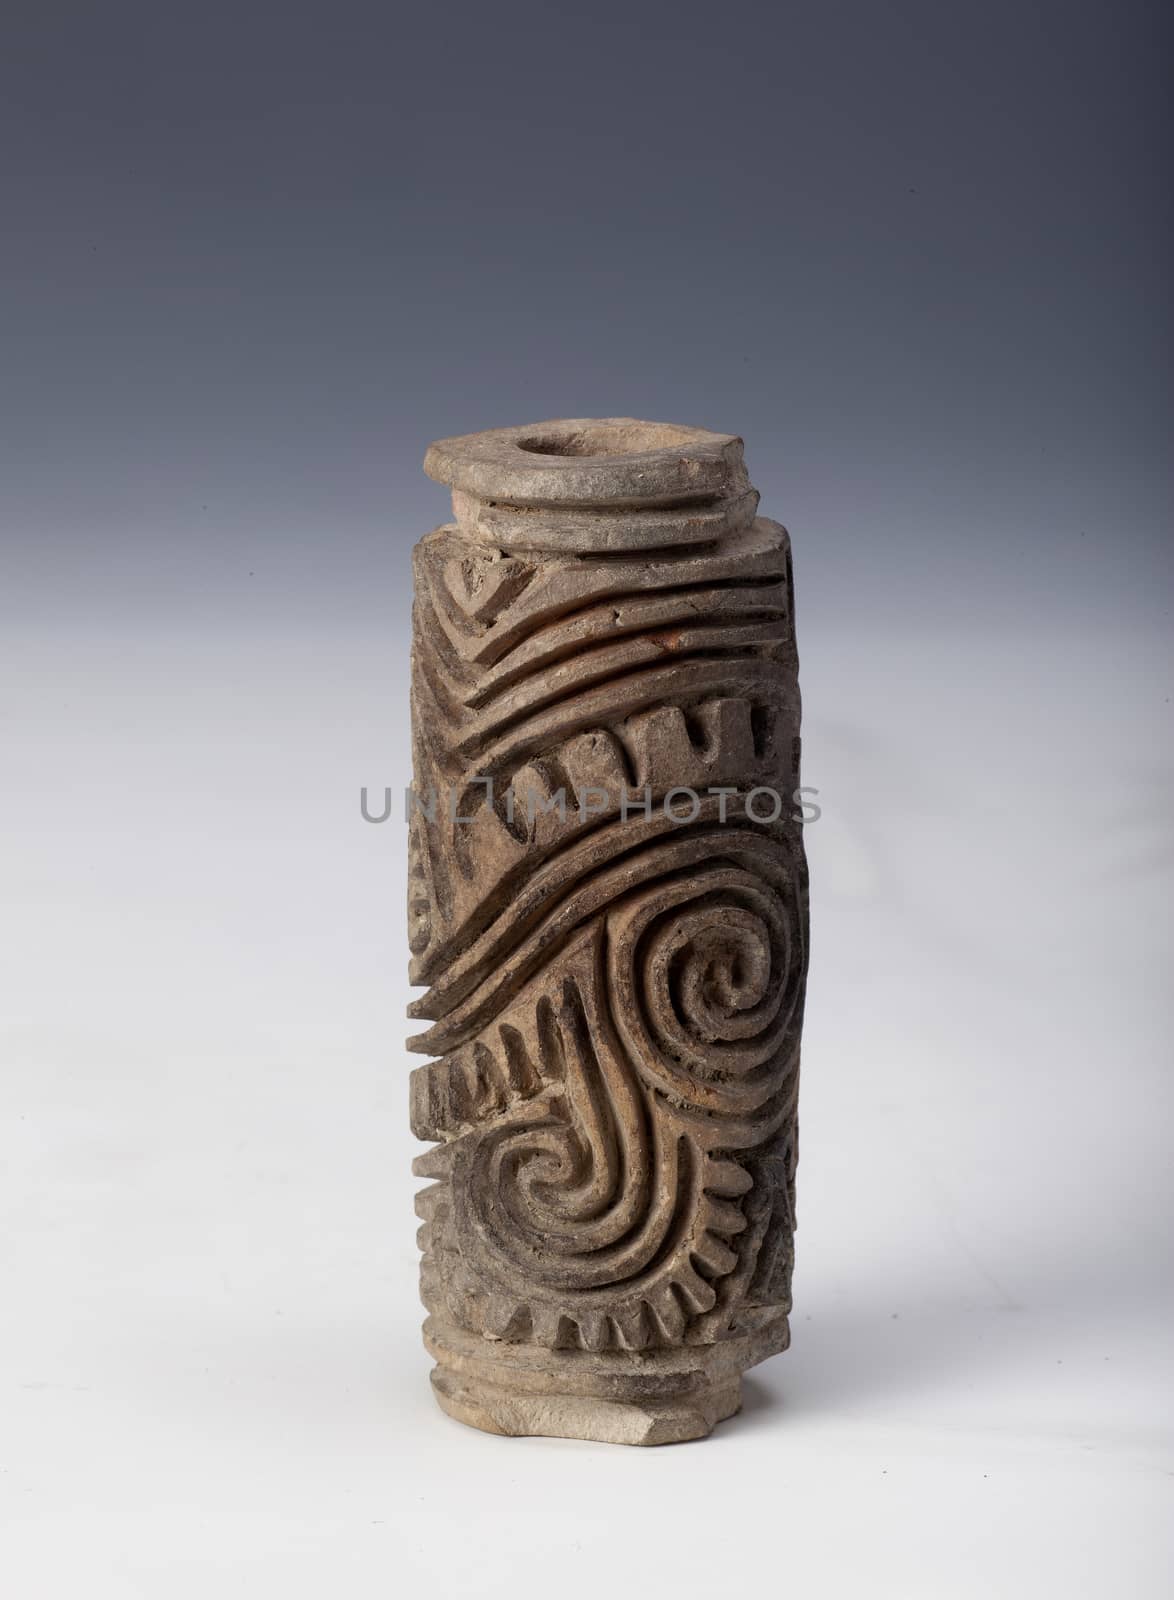 seal, signet with decorum in argil or clay, ancient art of ecuador